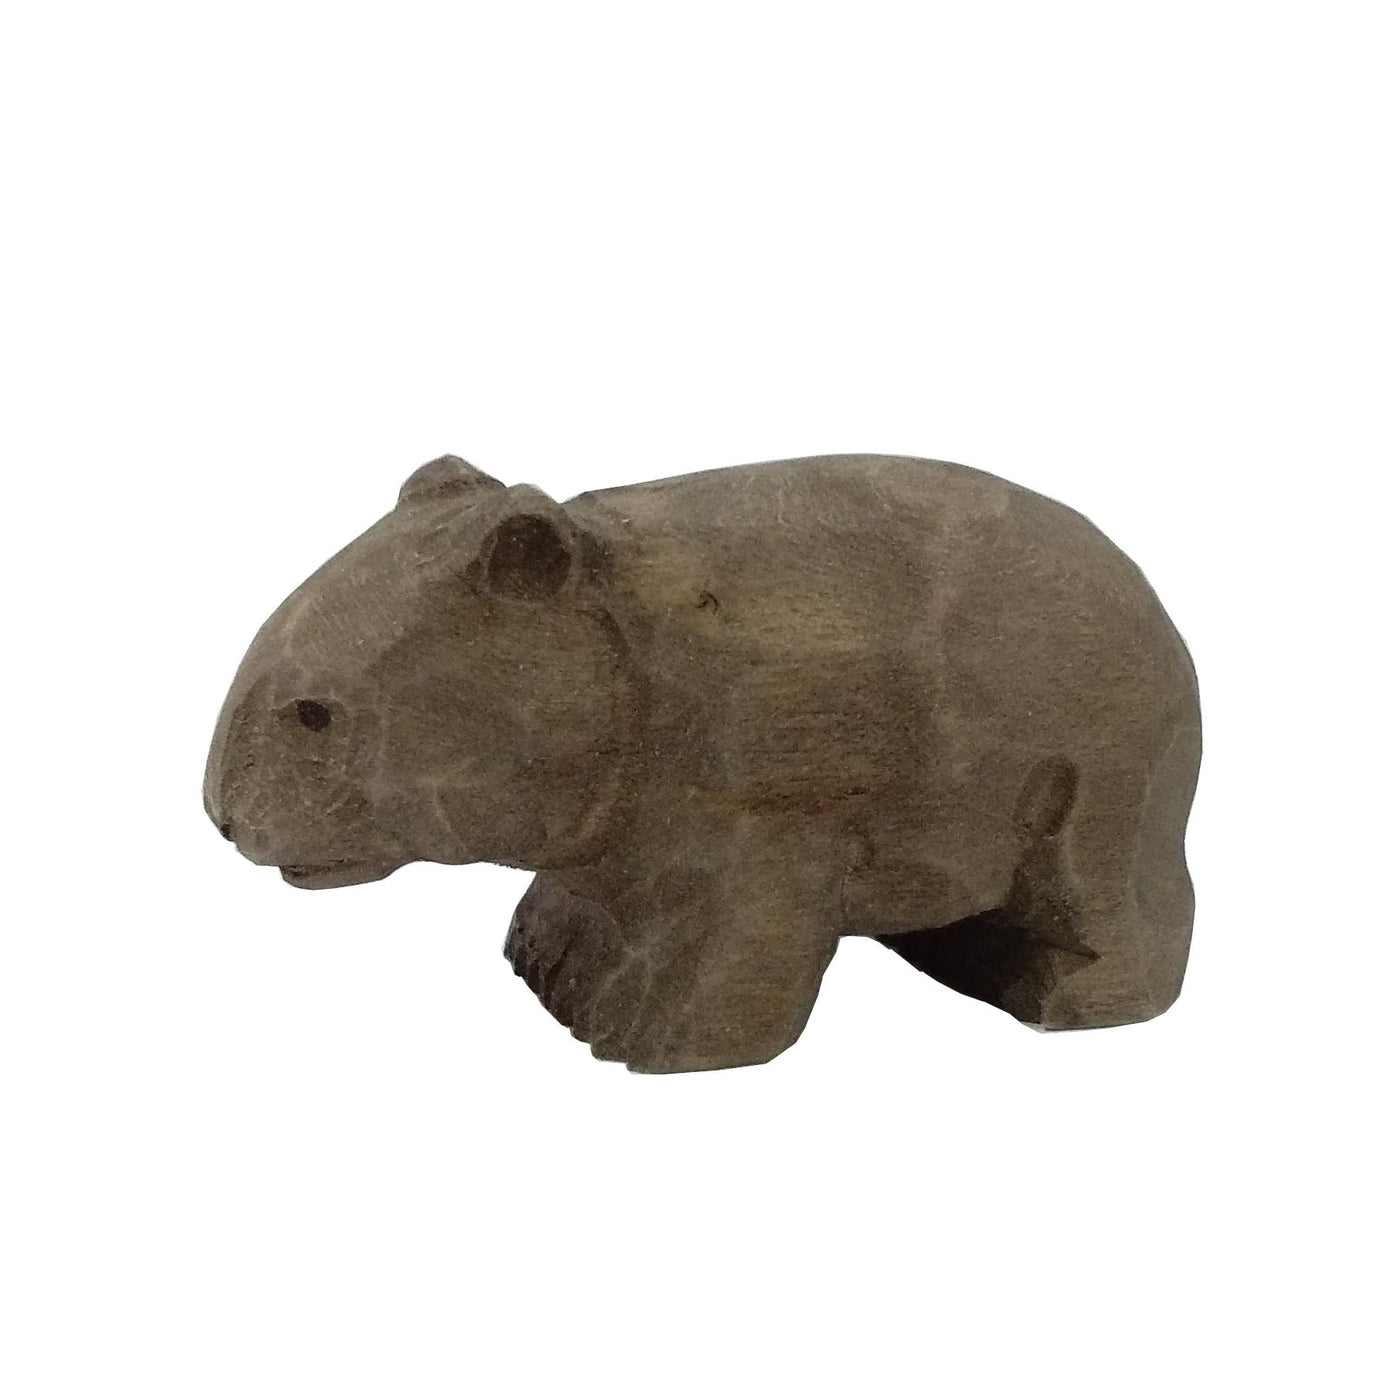 Wudimals® Wooden Wombat Animal Toy